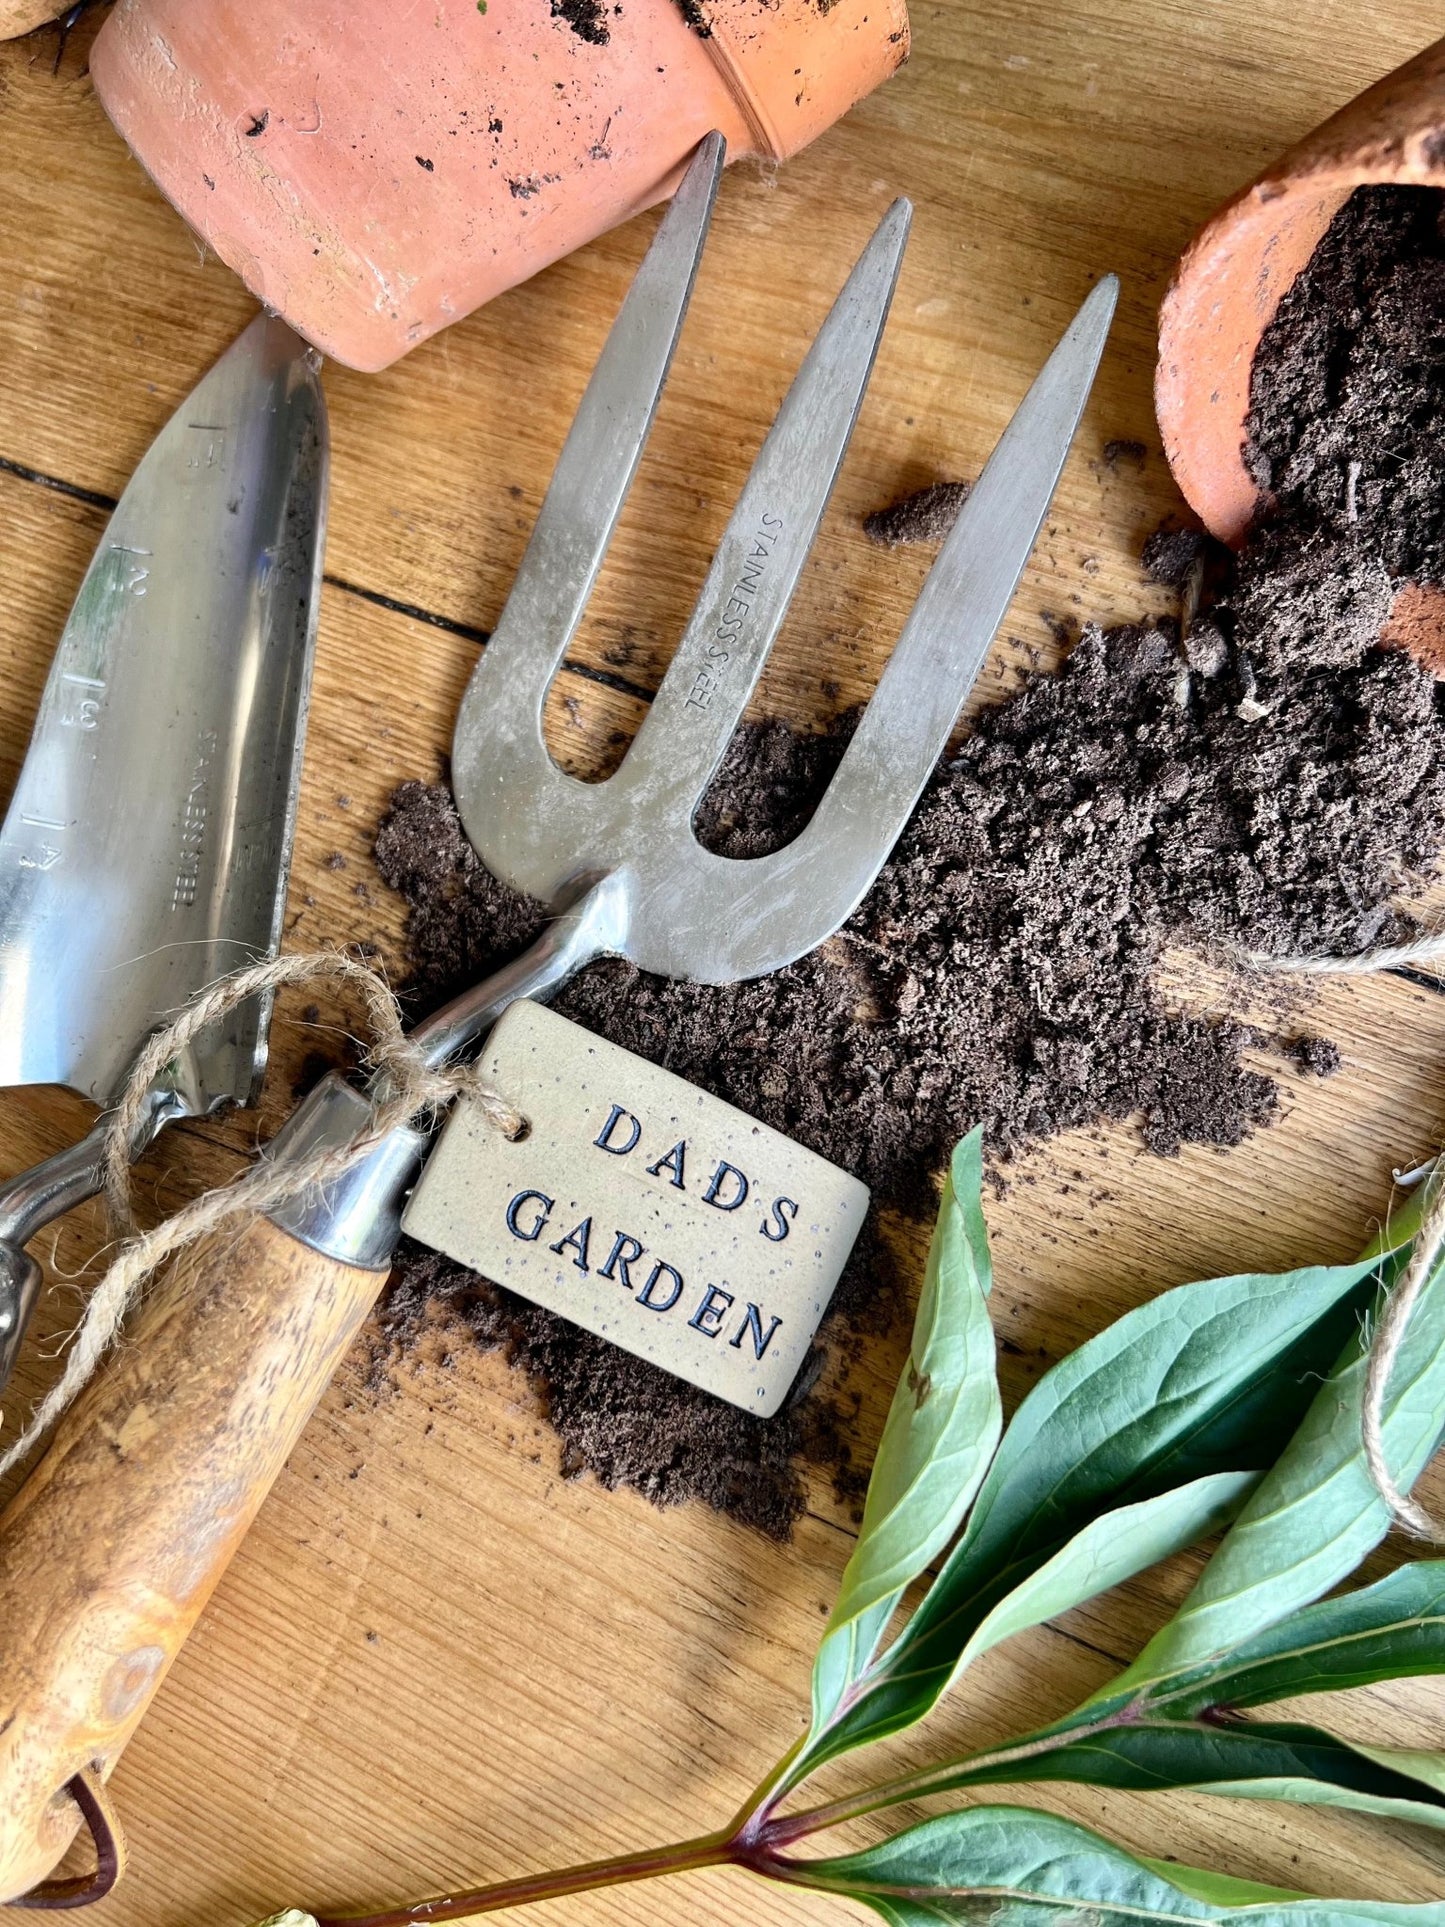 Dads Garden | Ceramic tag